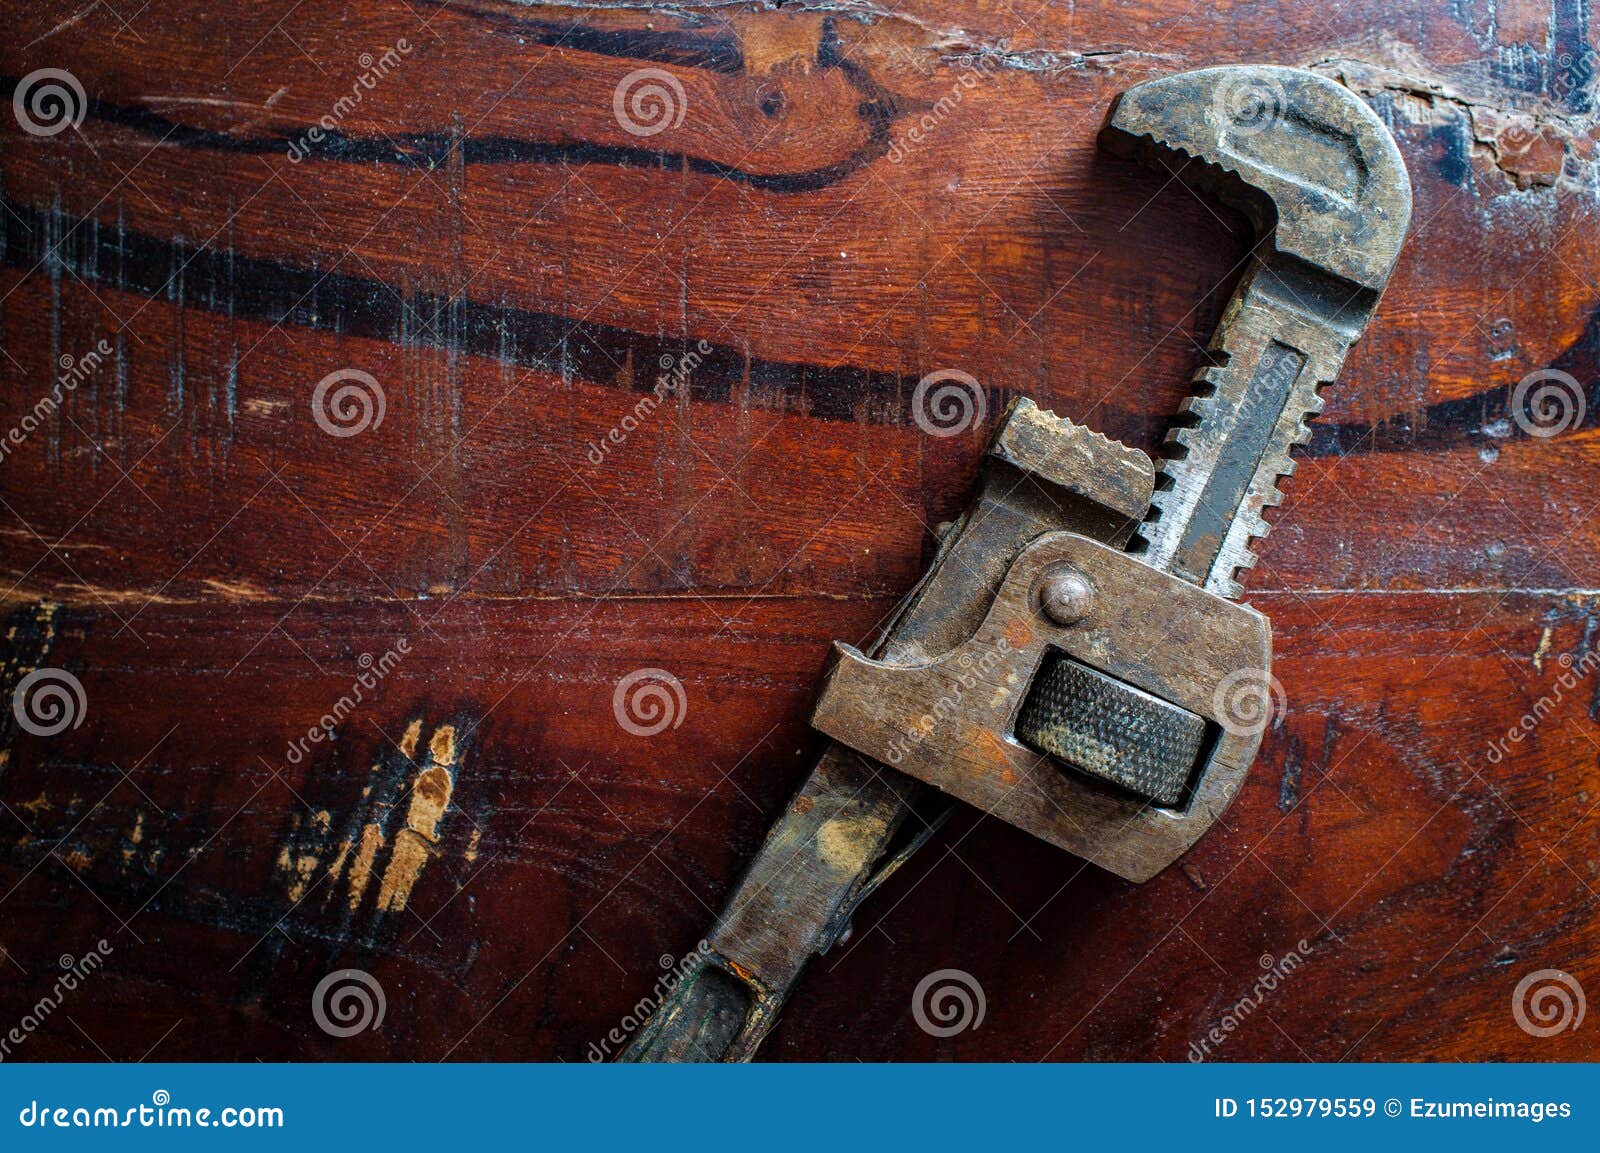 Old Vintage Monkey Wrench stock image. Image of object - 152979559